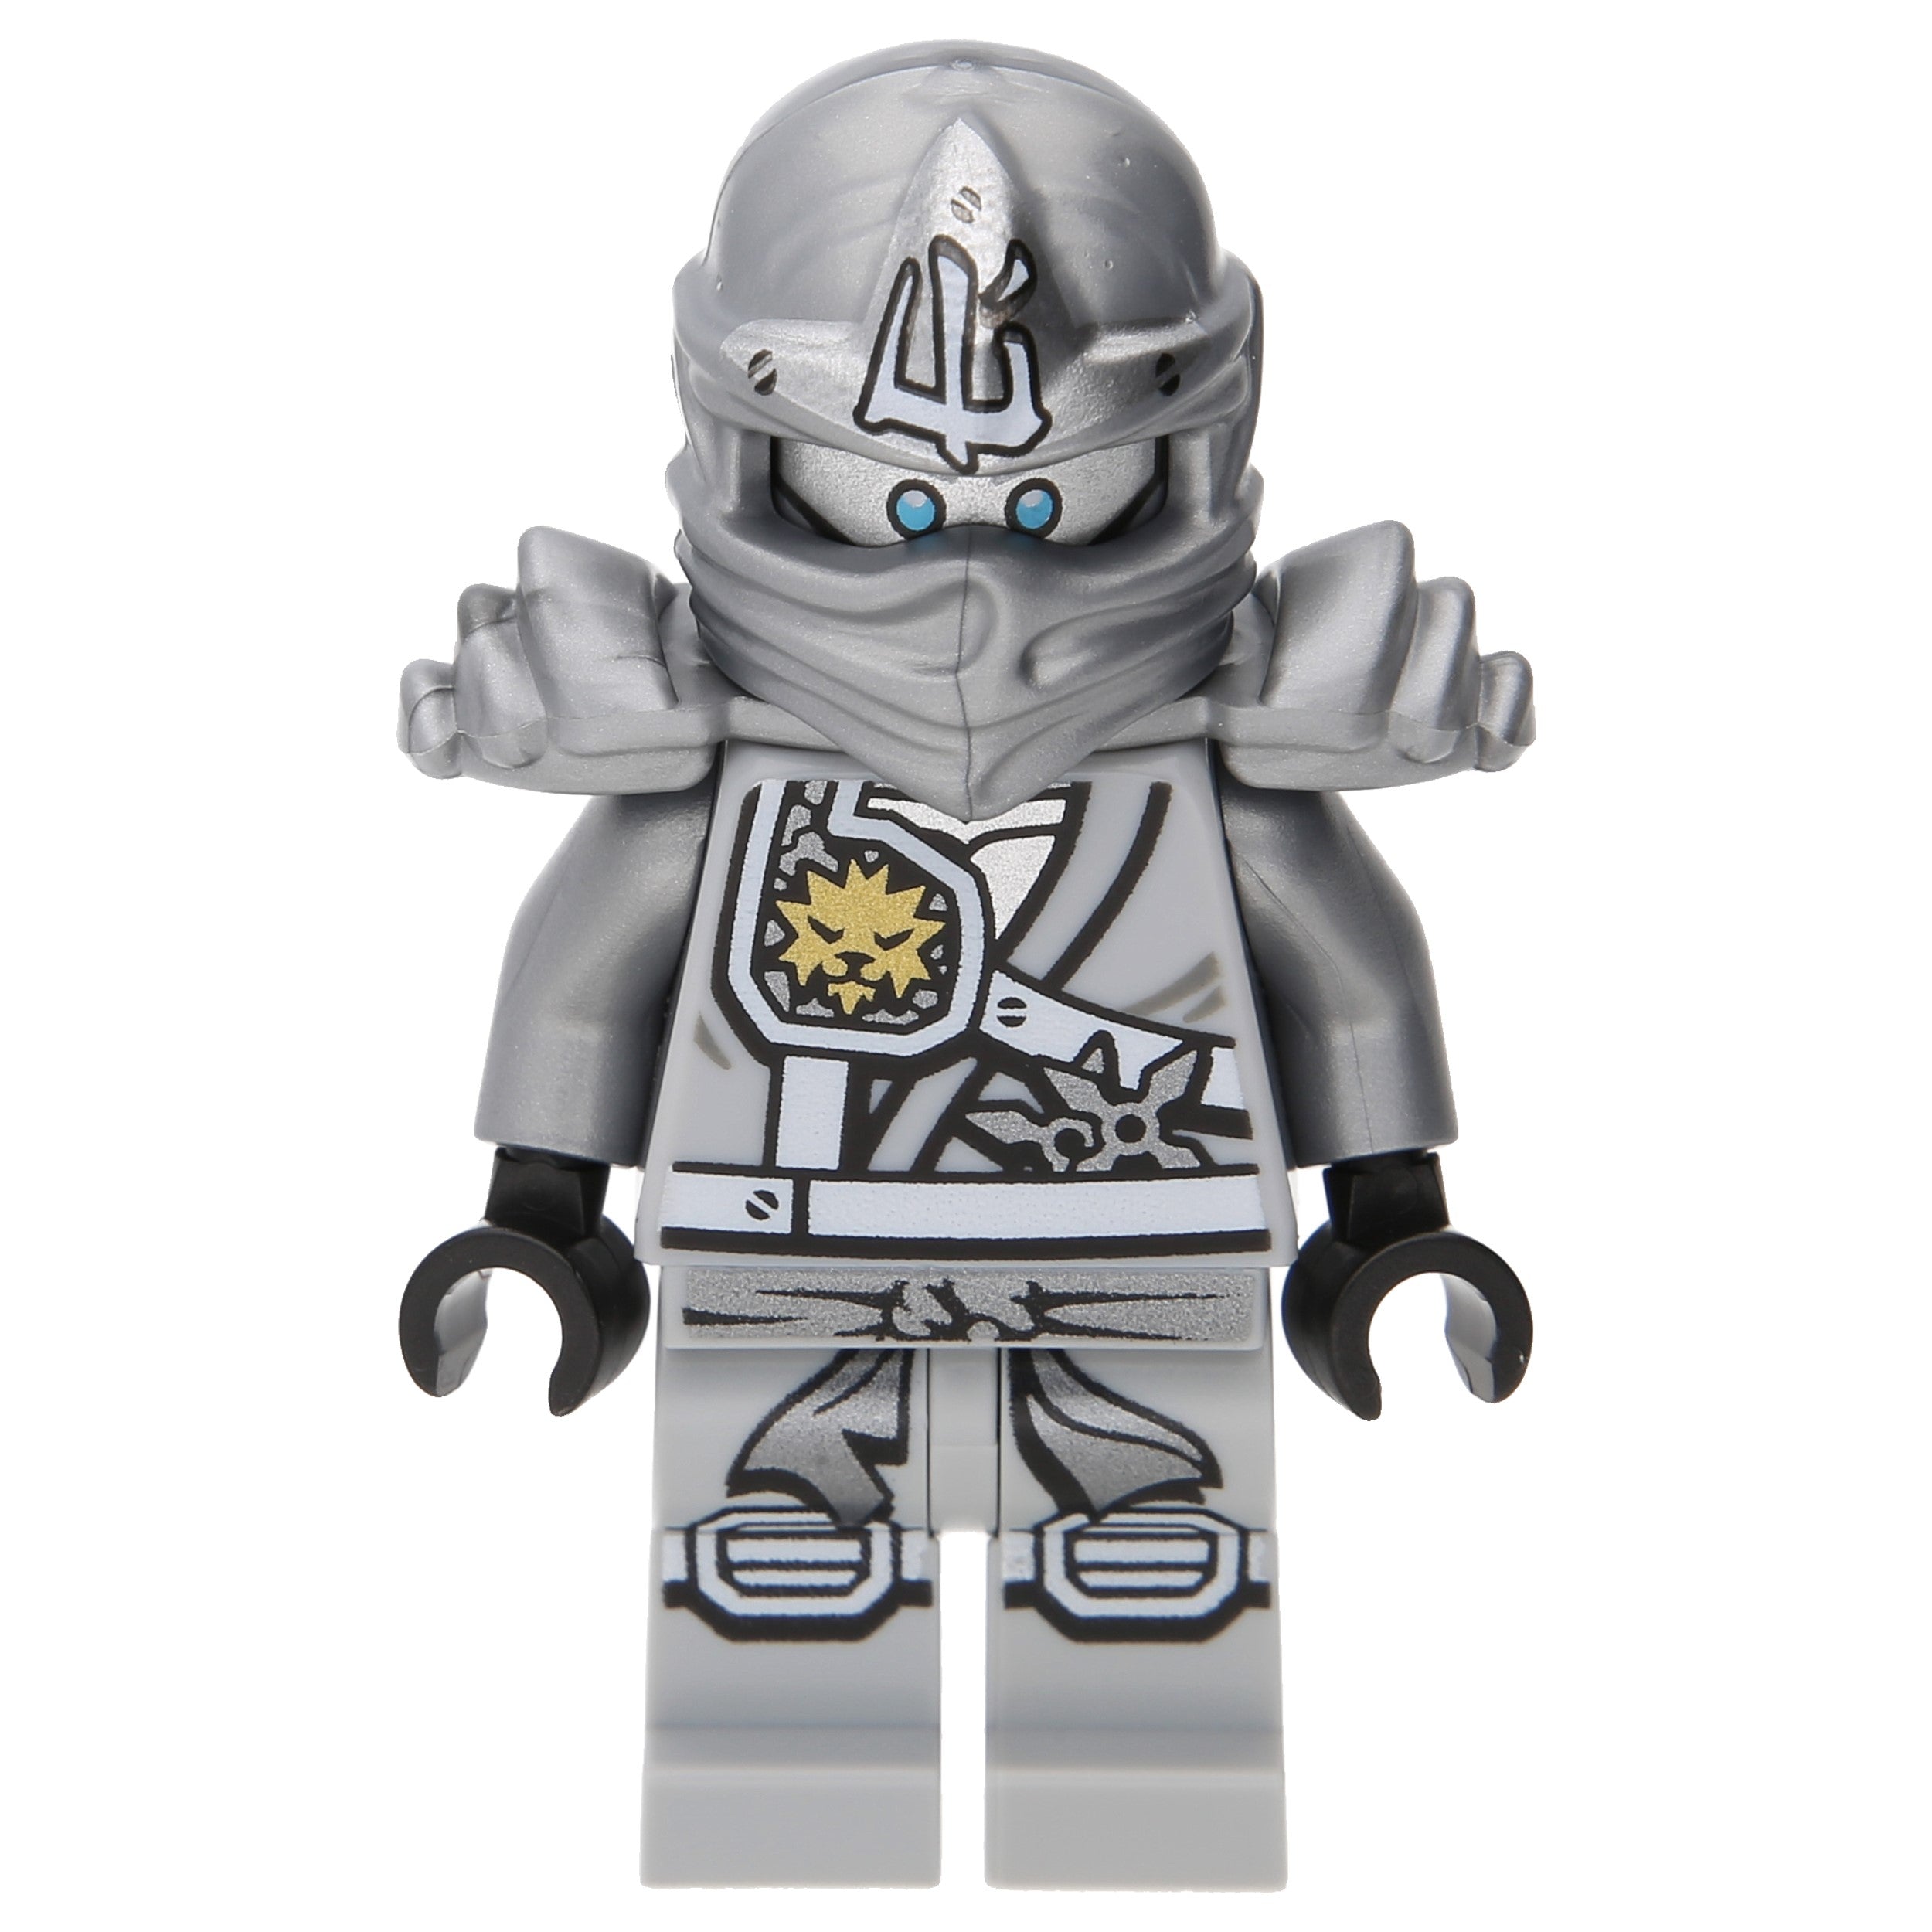 LEGO Ninjago Minifigures - Titan Ninja Zane with sword sheath